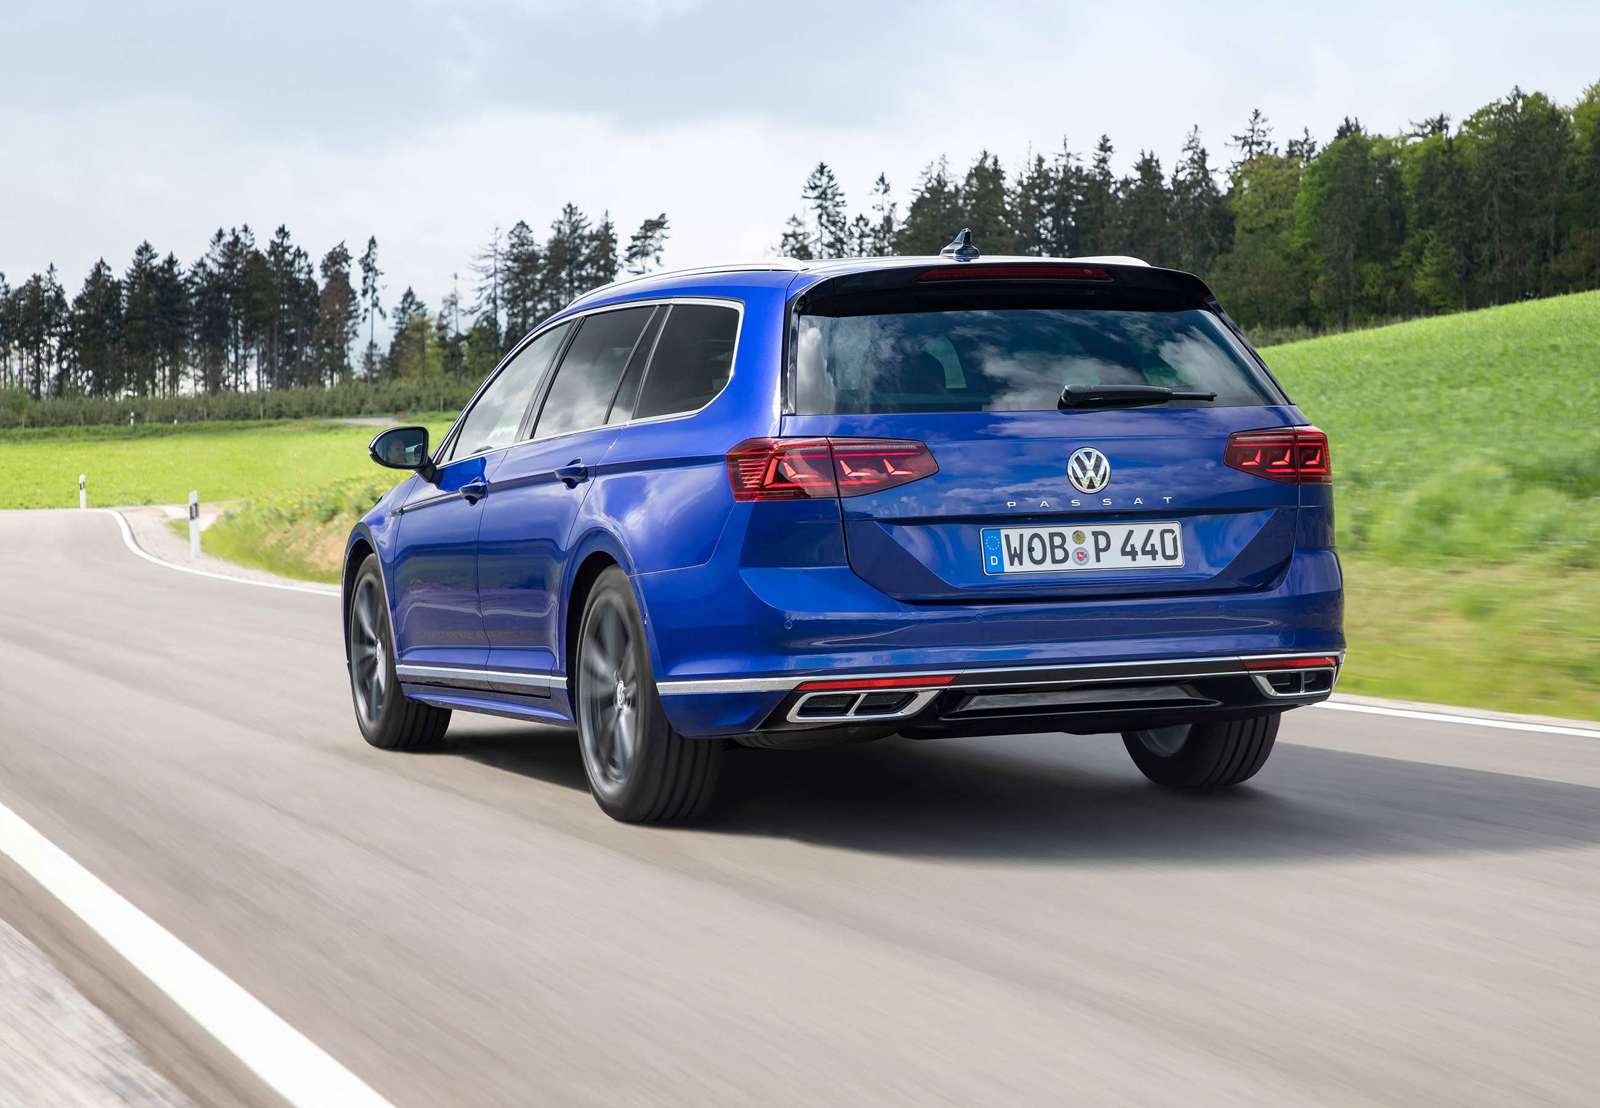 Volkswagen Passat [B8] (2015 - 2019) used car review